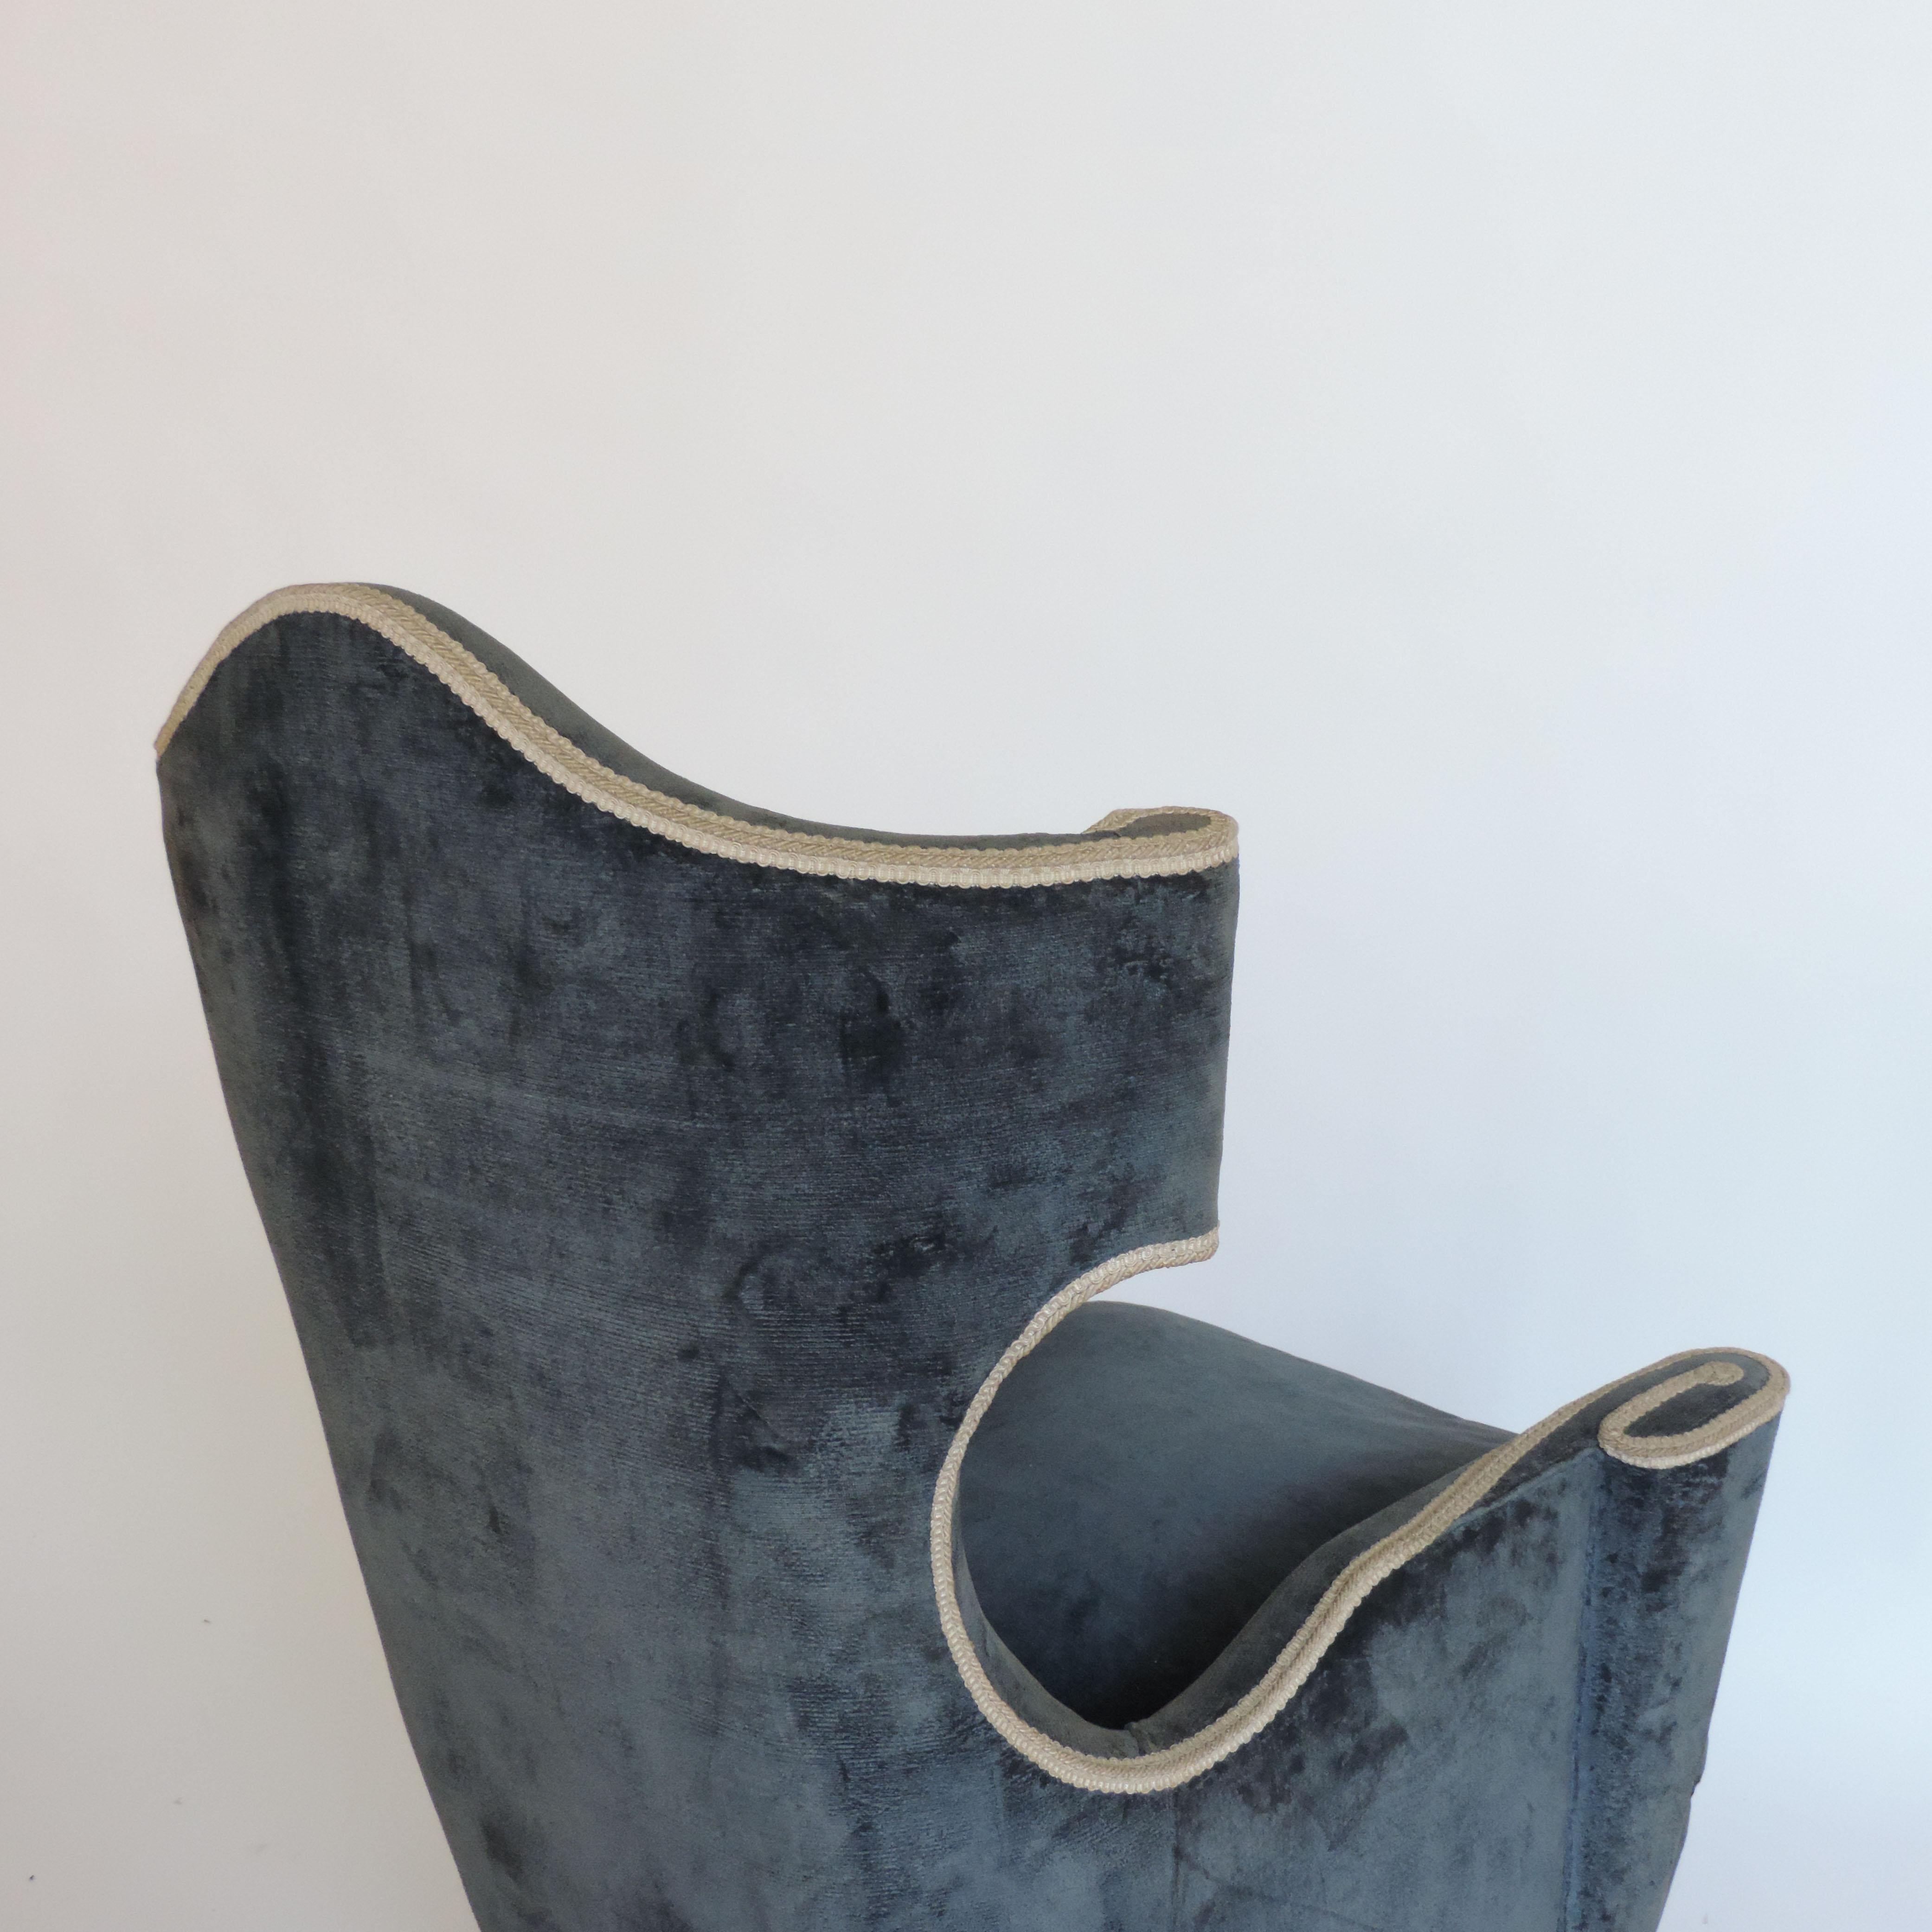 Surreal Pair of Italian 1950s Armchairs Bergeres in their original Dark Blue Velvet upholstery.
Cone wooden legs